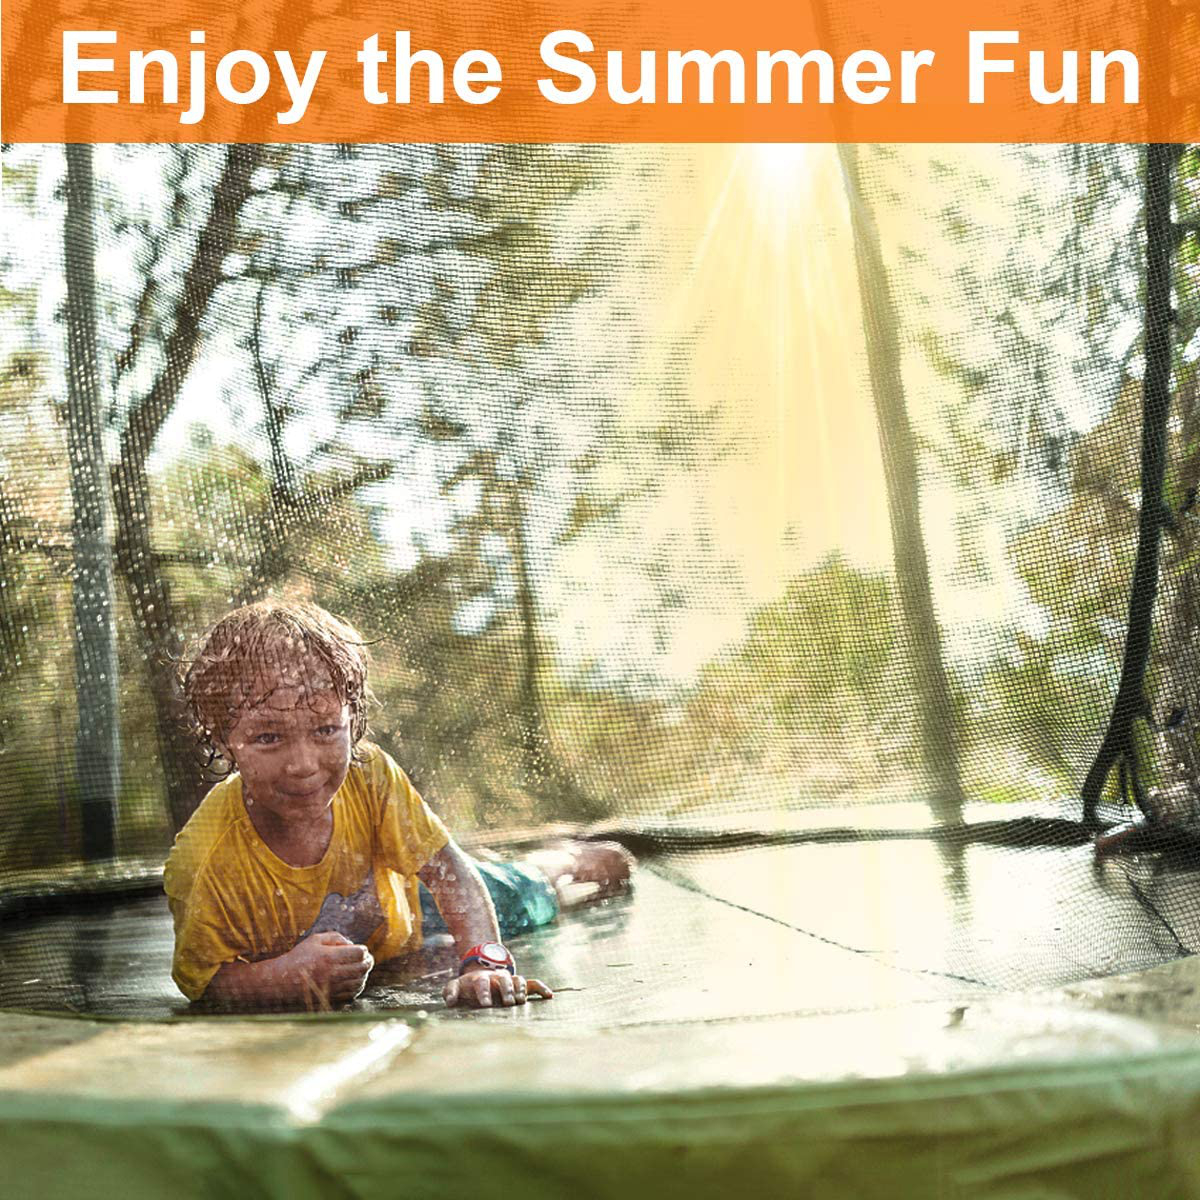 12m-Spray-Hose-Trampoline-Sprinkler-Water-Spray-Kids-Outdoor-Enjoy-Summer-Backyard-Water-Park-Game-1743355-4